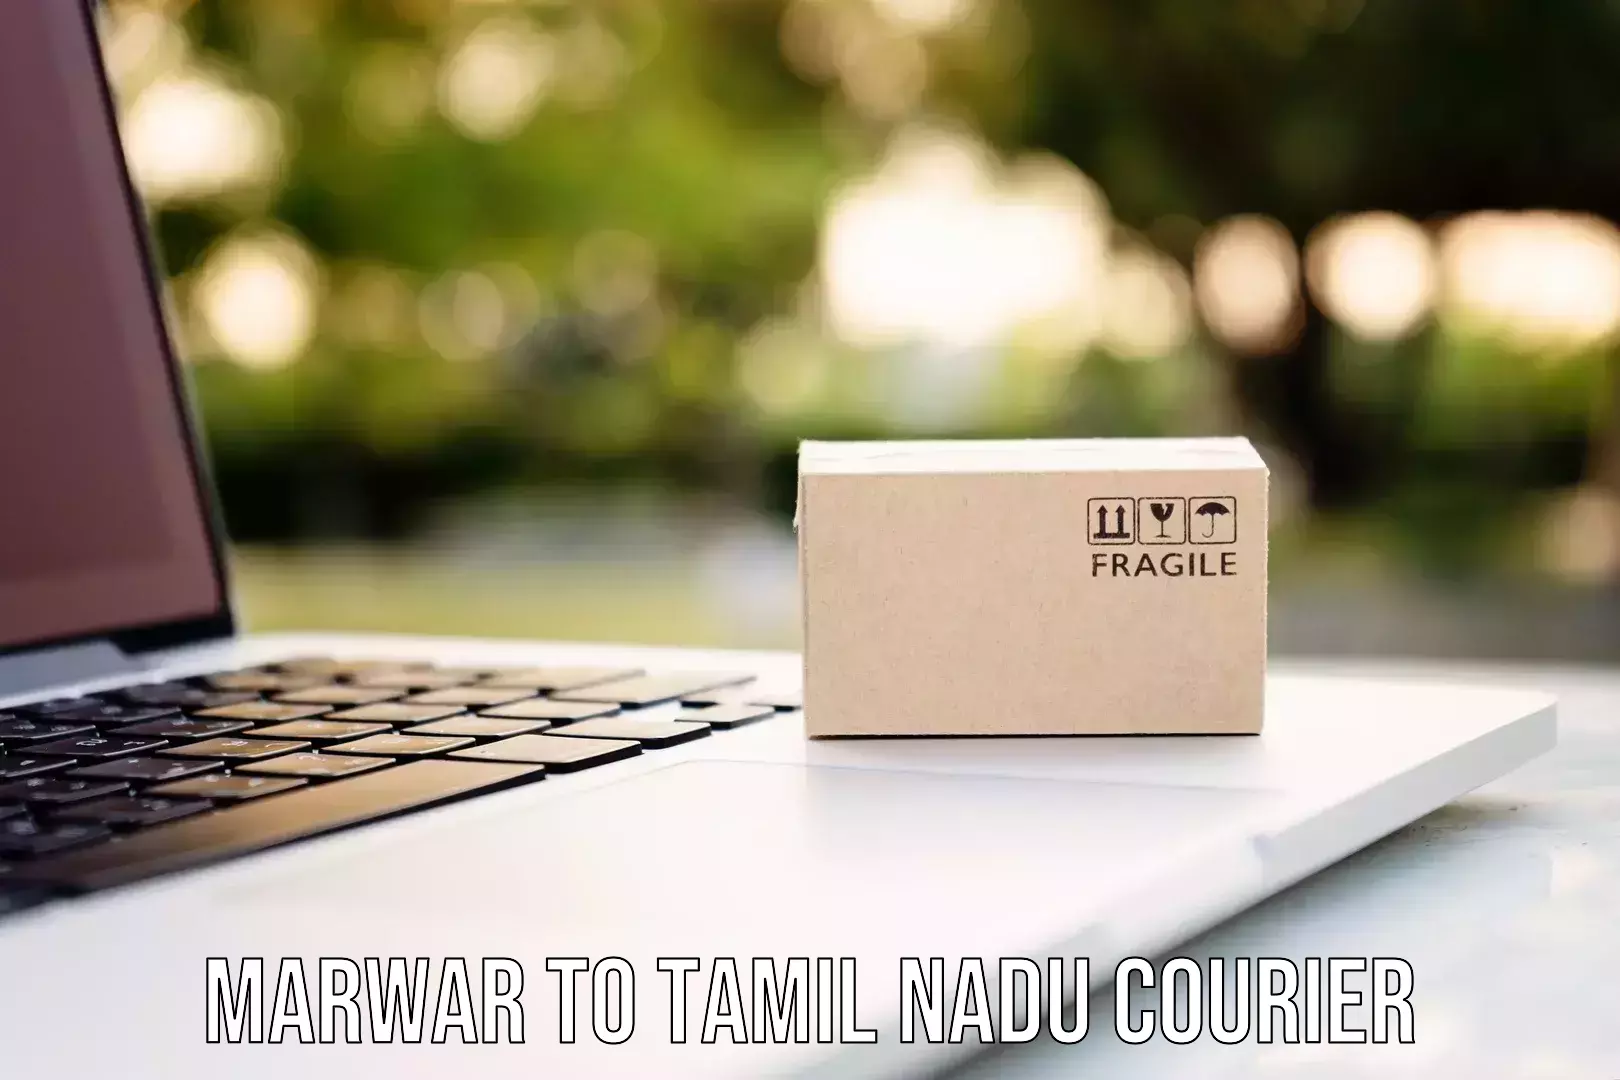 Doorstep delivery service Marwar to Tamil Nadu